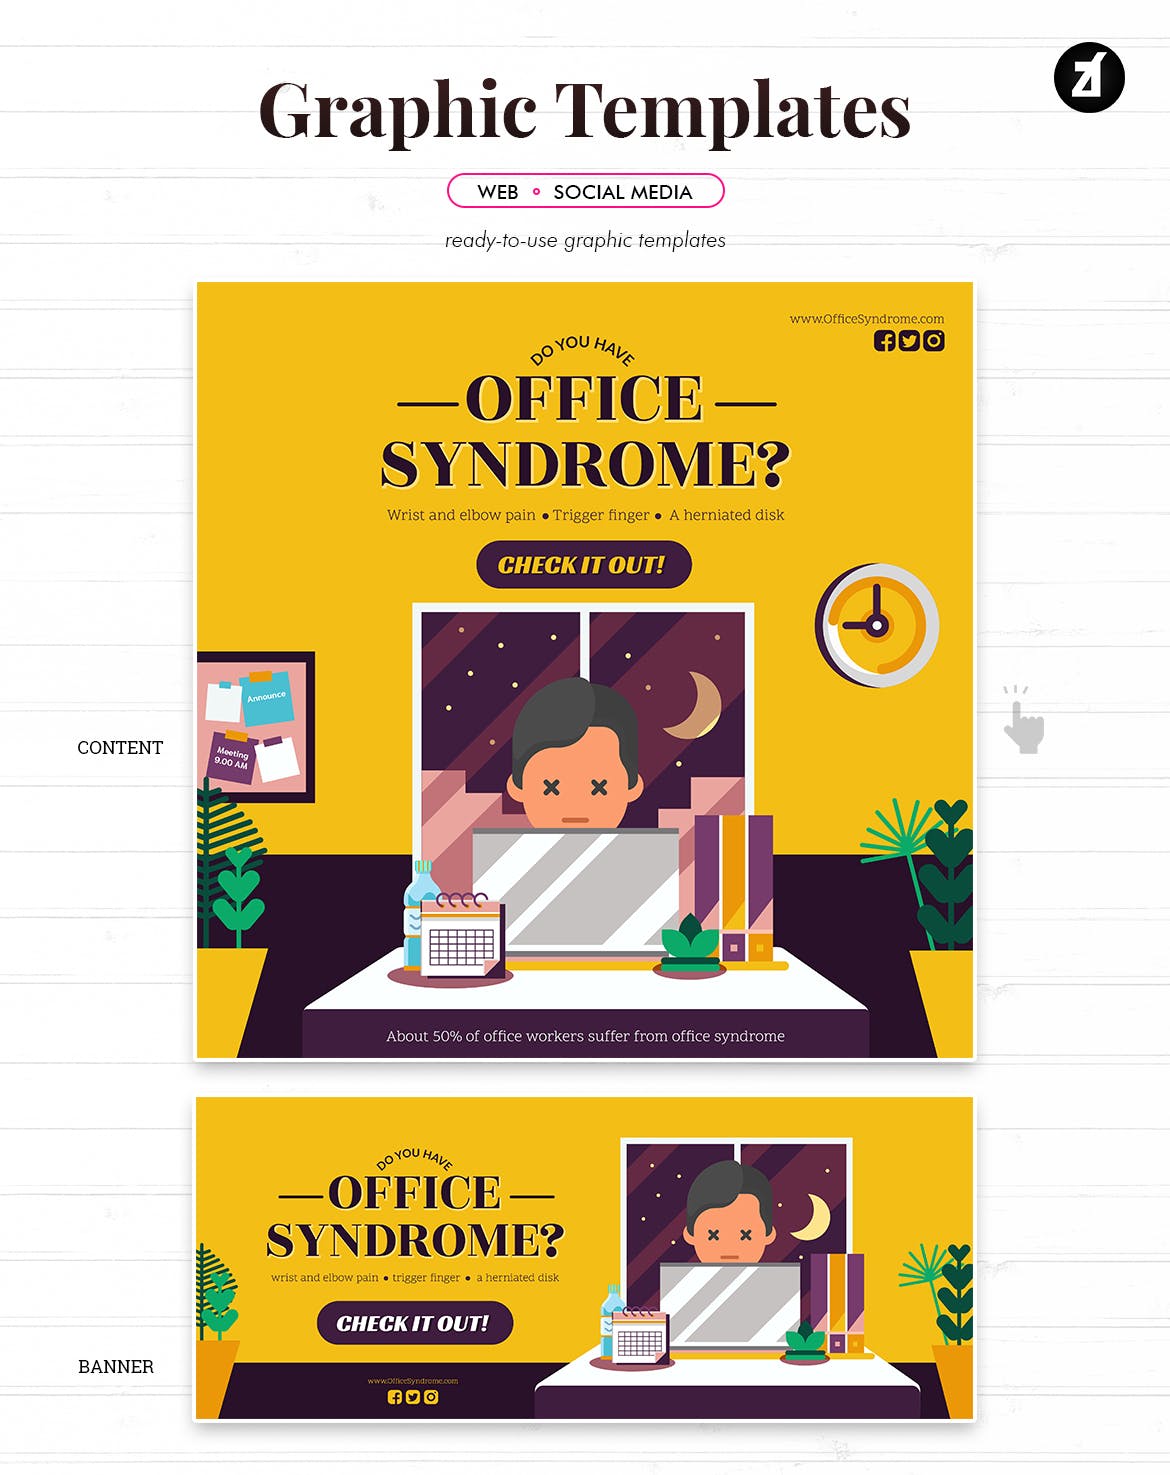 办公室综合症主题矢量插画素材 Office syndrome graphic templates插图2